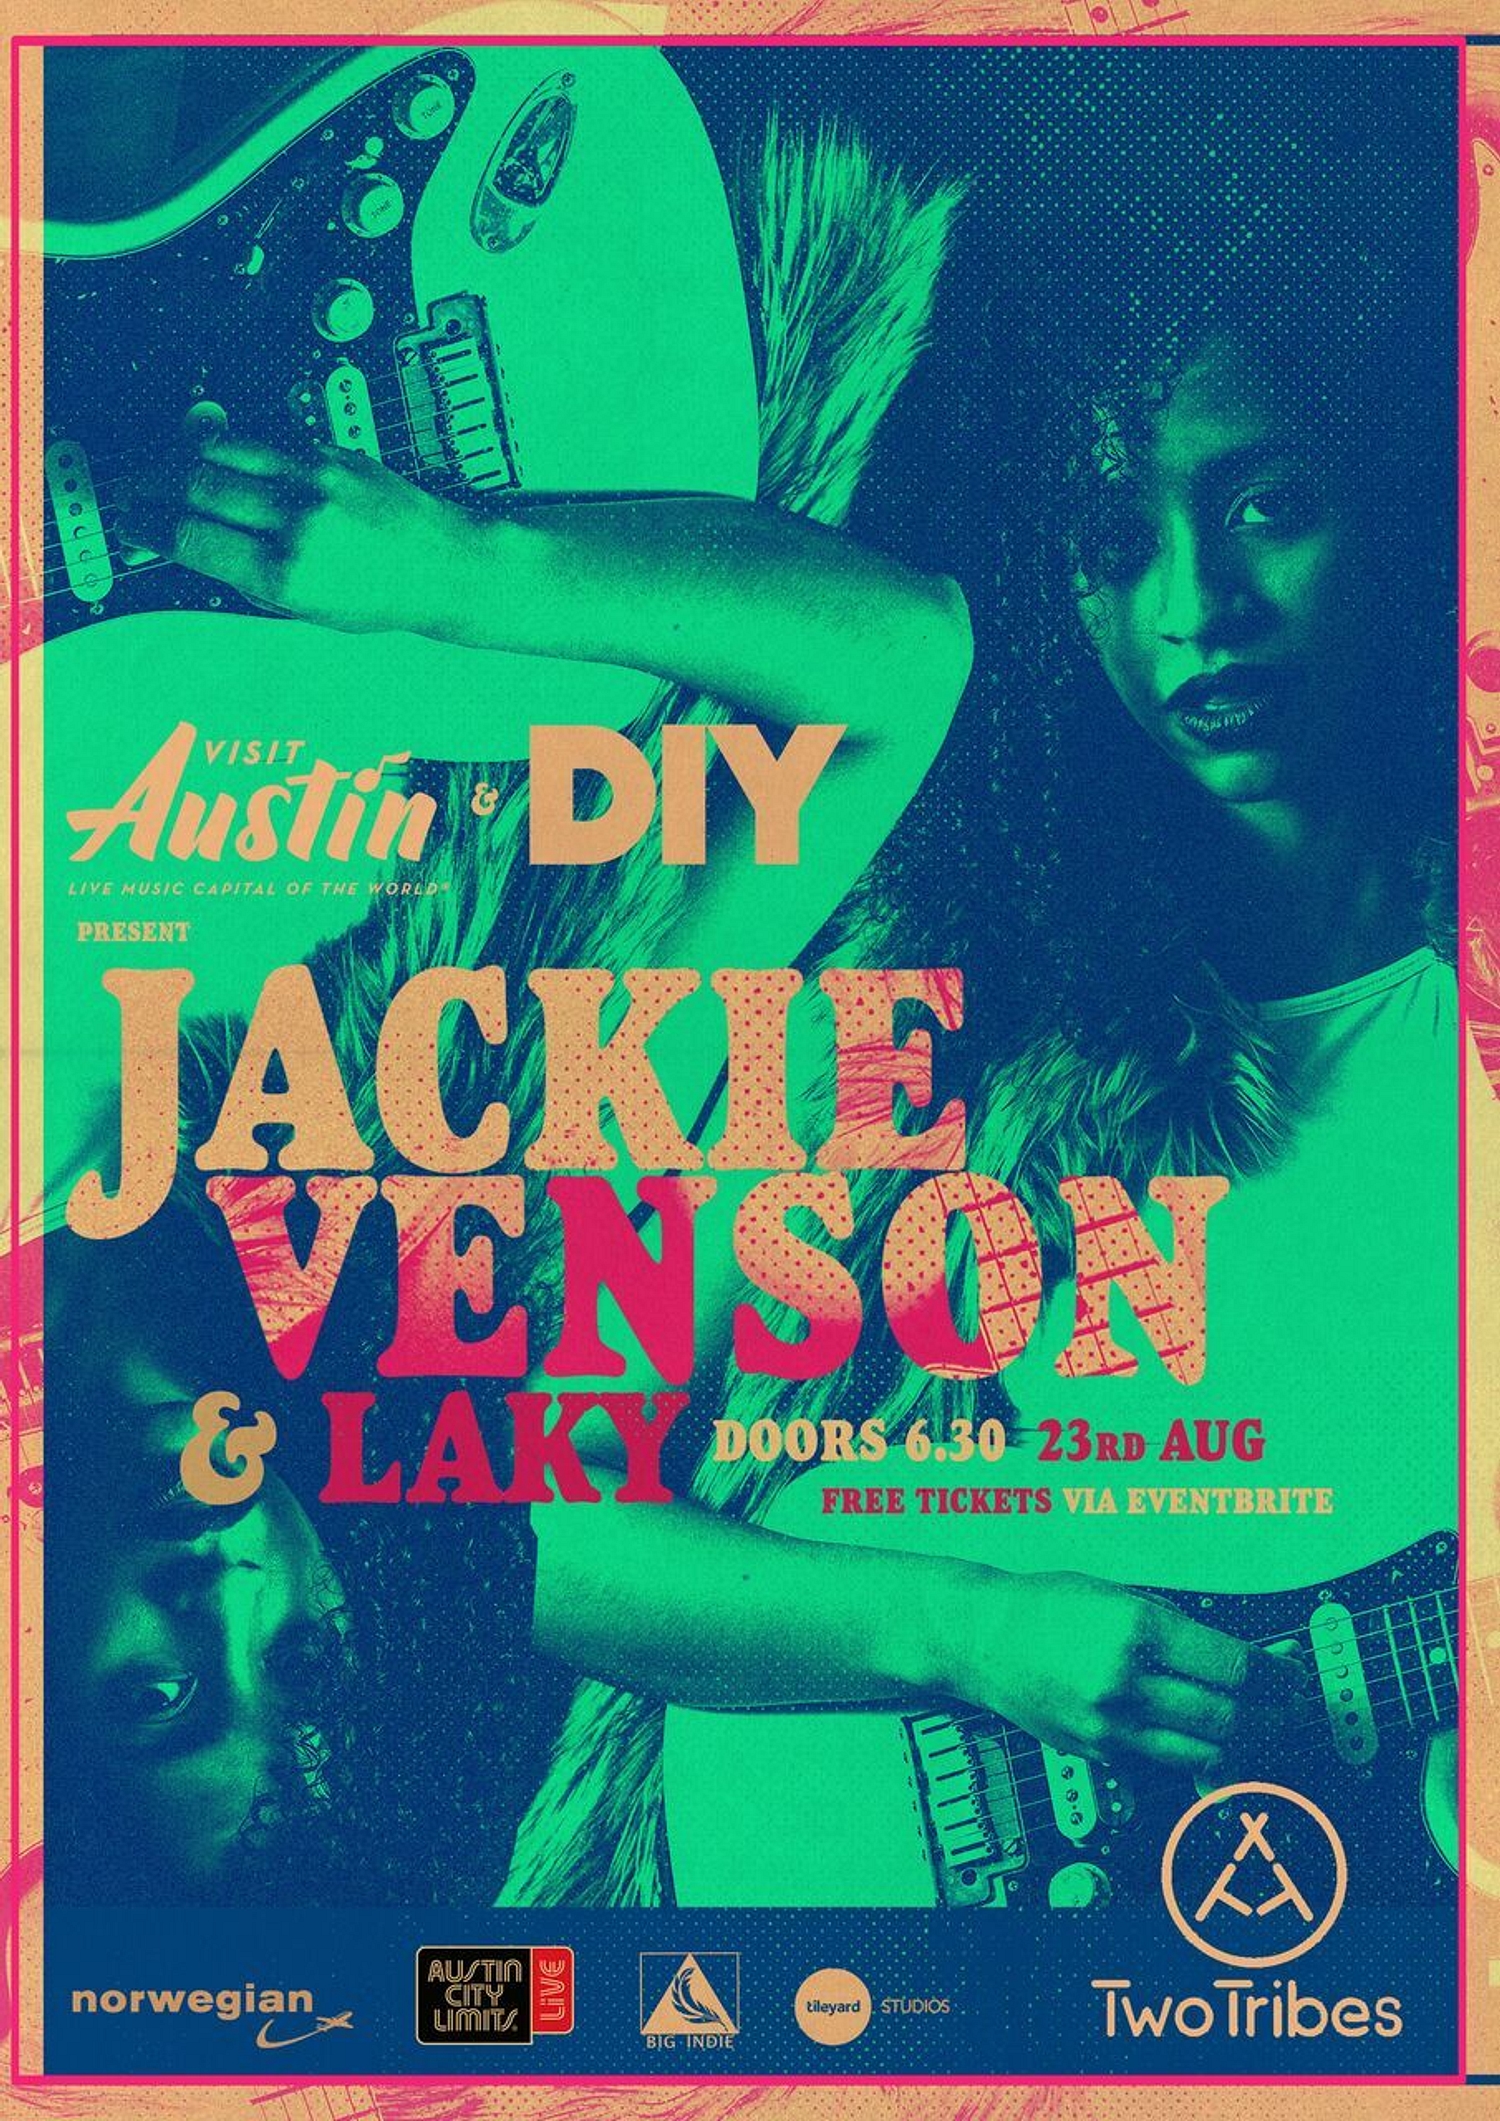 Austin songwriter Jackie Venson to play DIY Presents + Visit Austin show